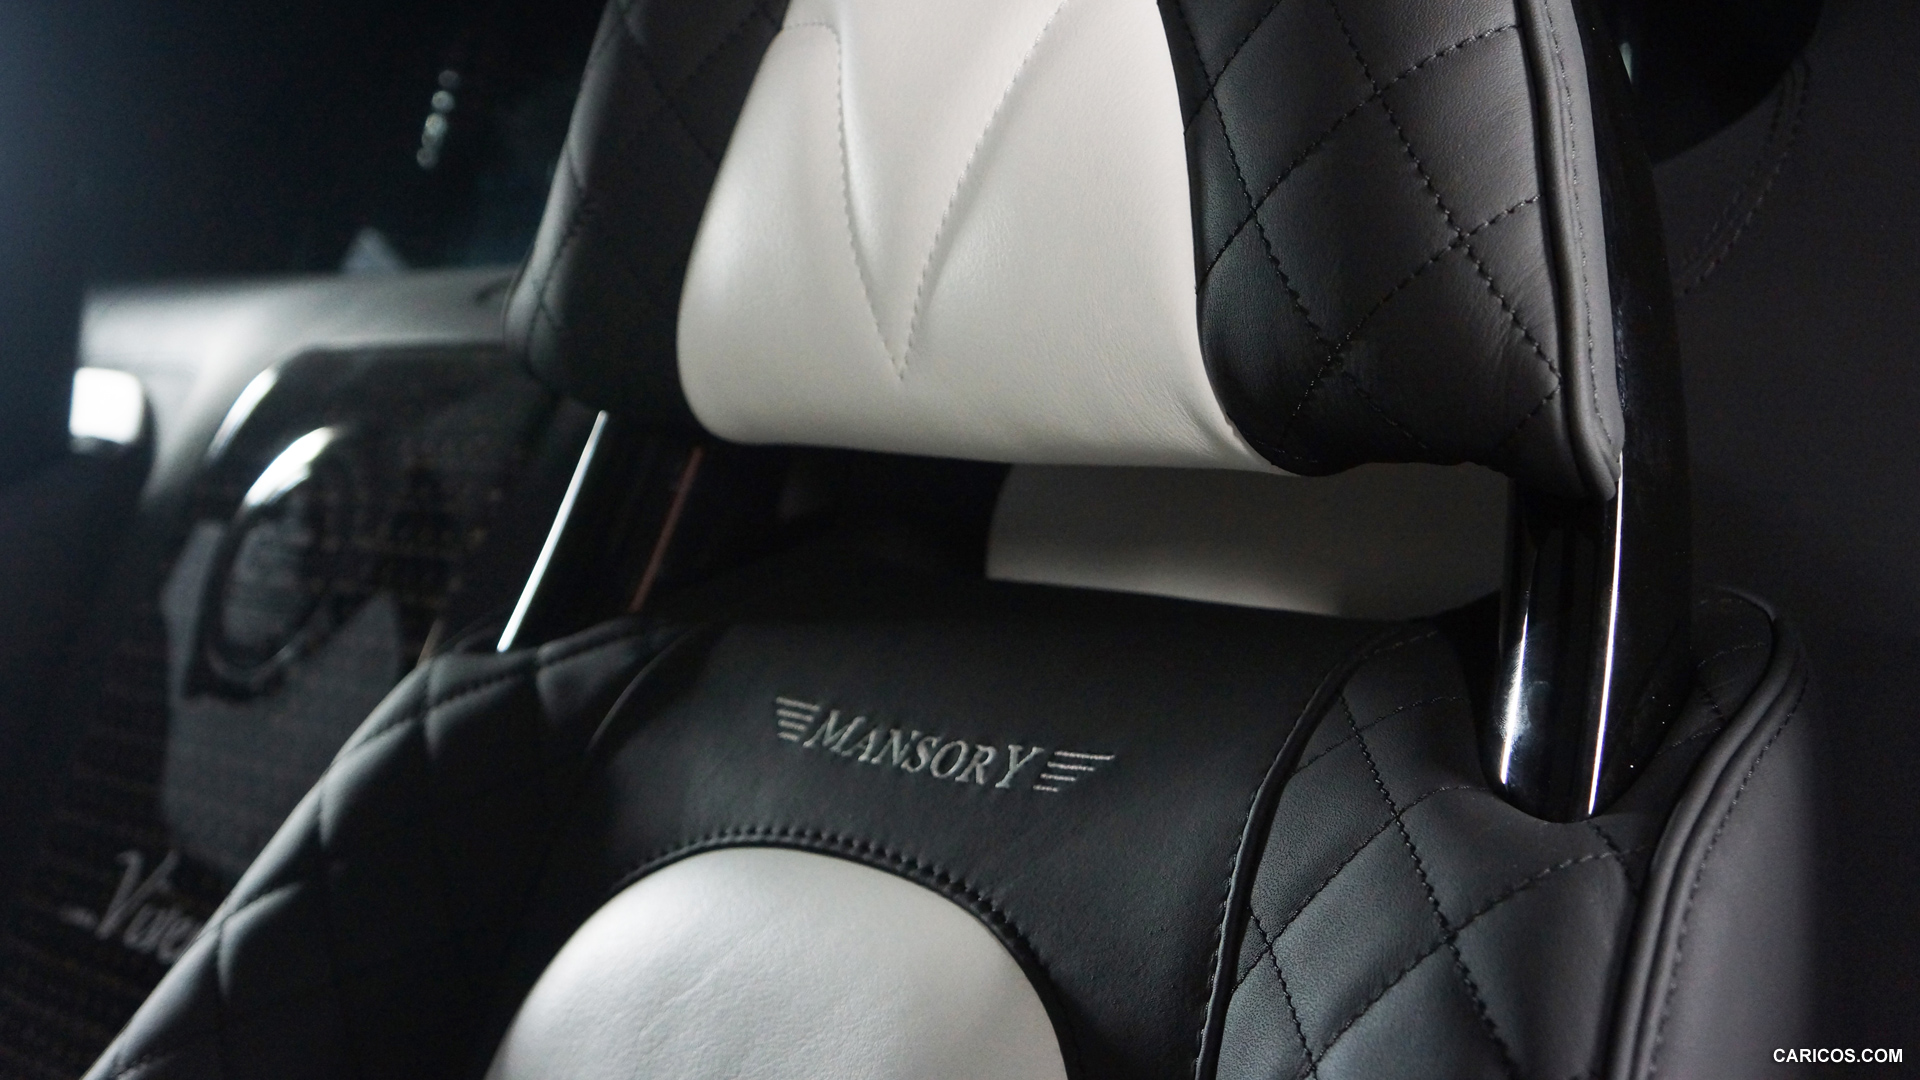 2014 Mansory Vivere based on Bugatti Veyron 16.4  - Interior Detail, #6 of 8